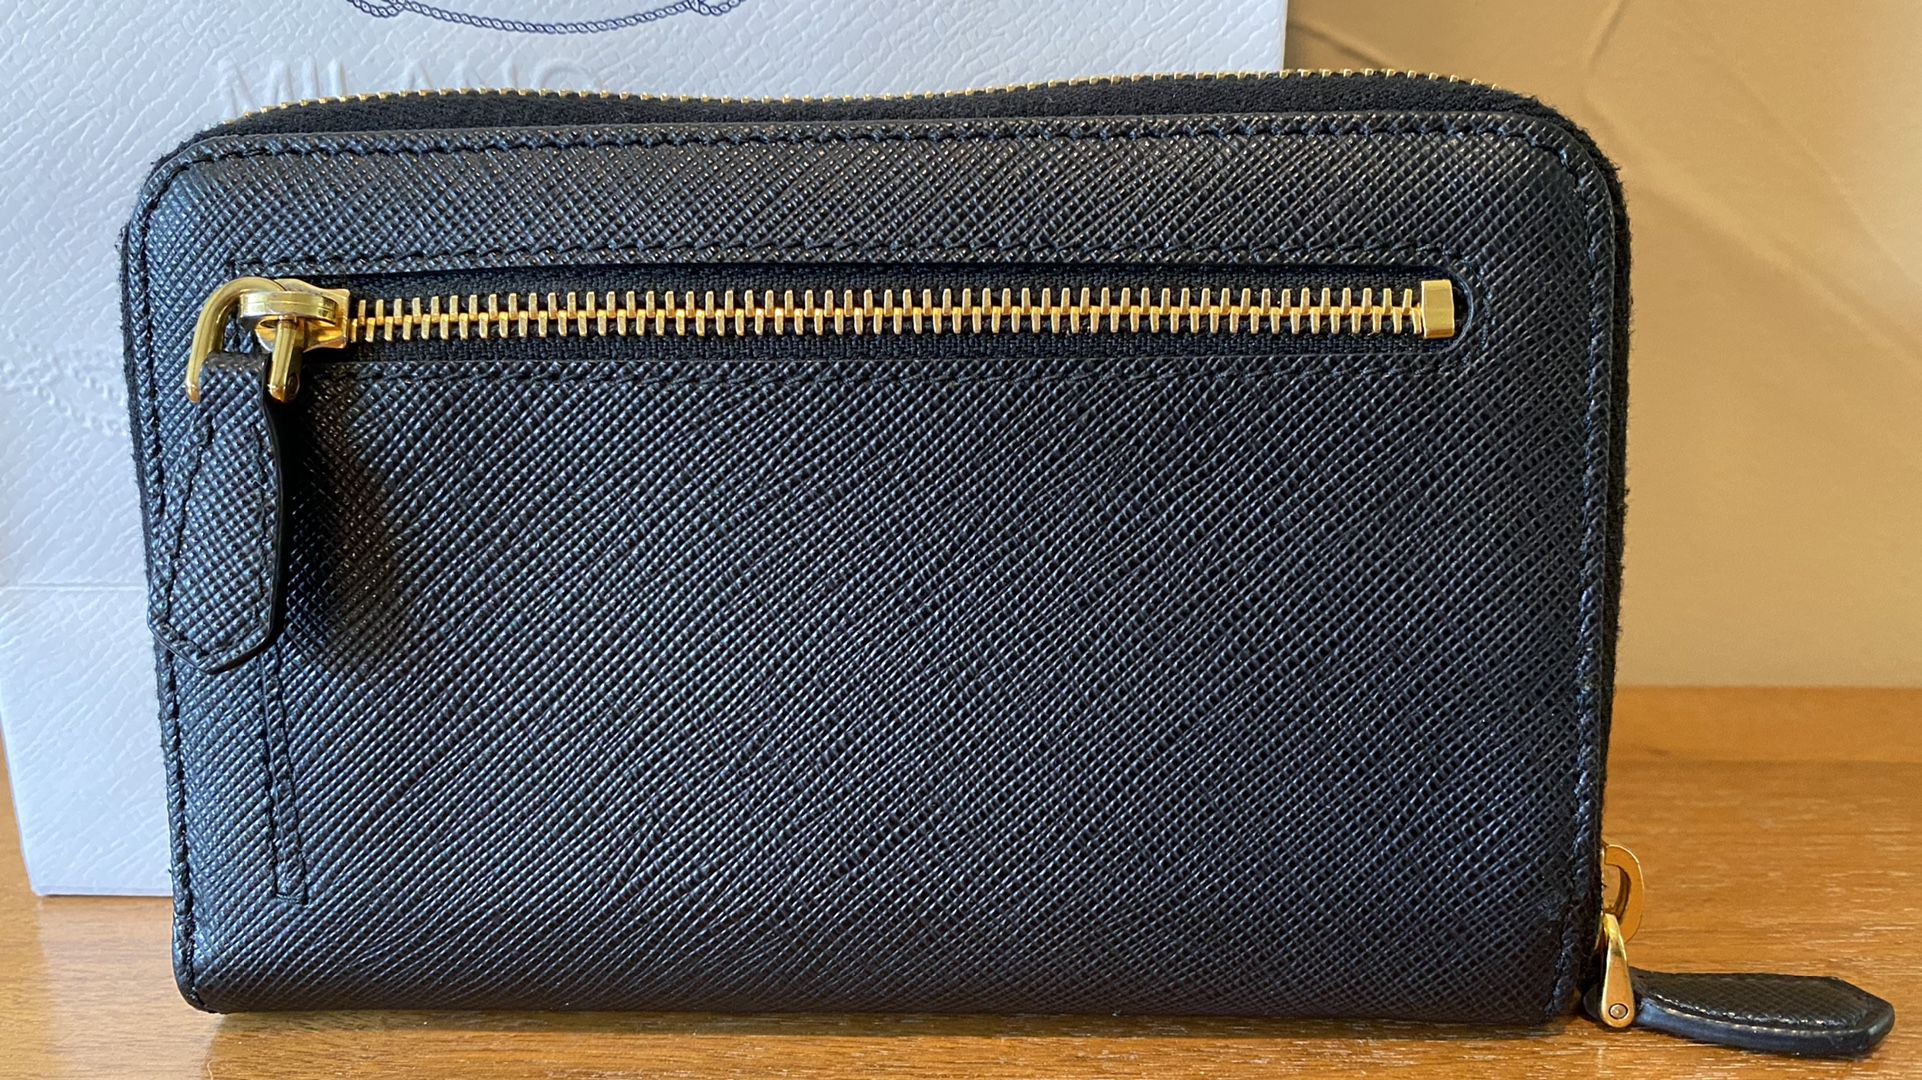 Prada Zip-Around Saffiano Leather Wallet Portafoglio Lampo (Black/Gold) for  Sale in Carrollton, TX - OfferUp